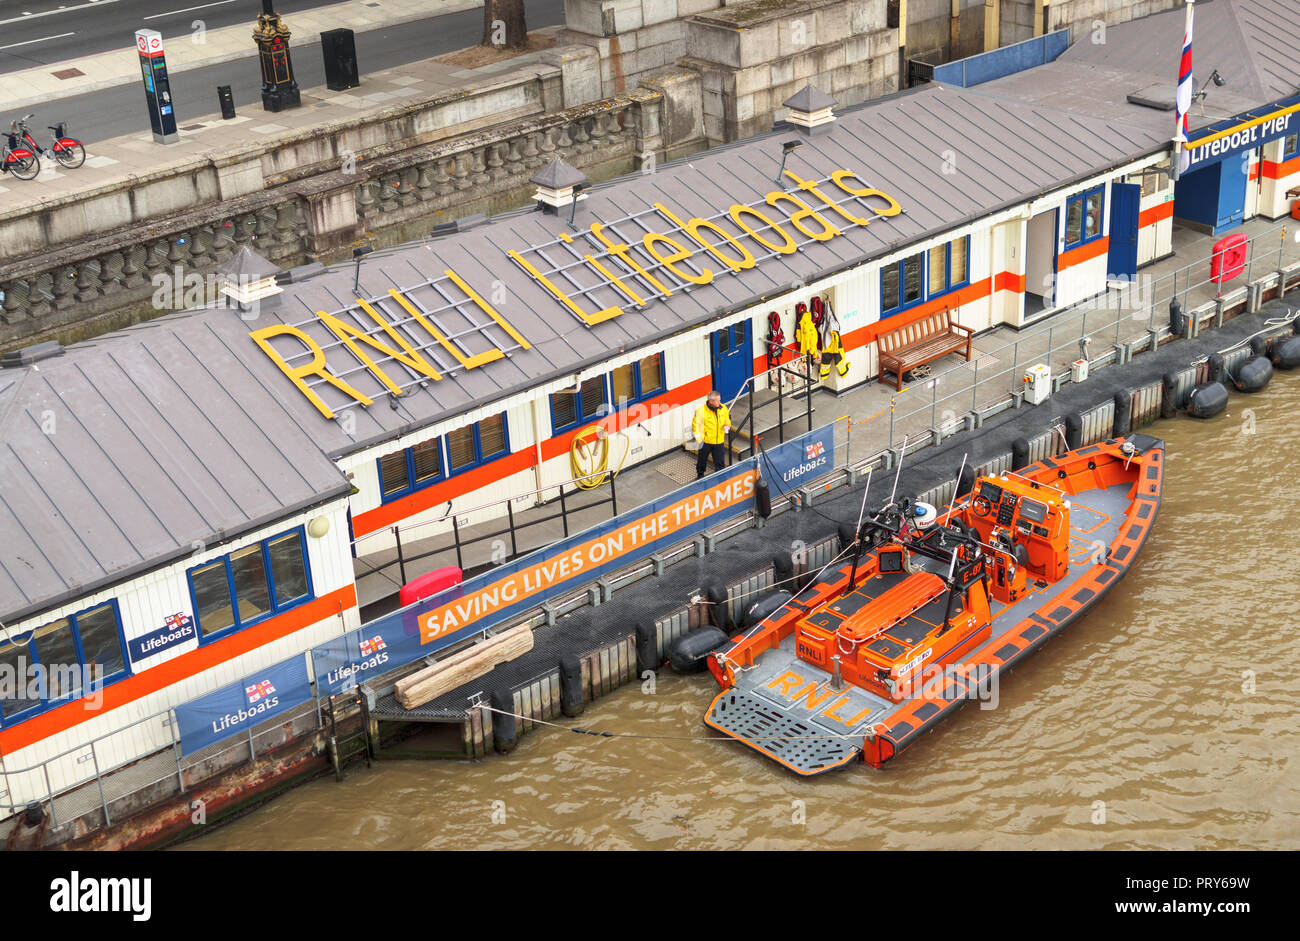 E Class Lifeboats - The RNLI Lifeboat Fleet